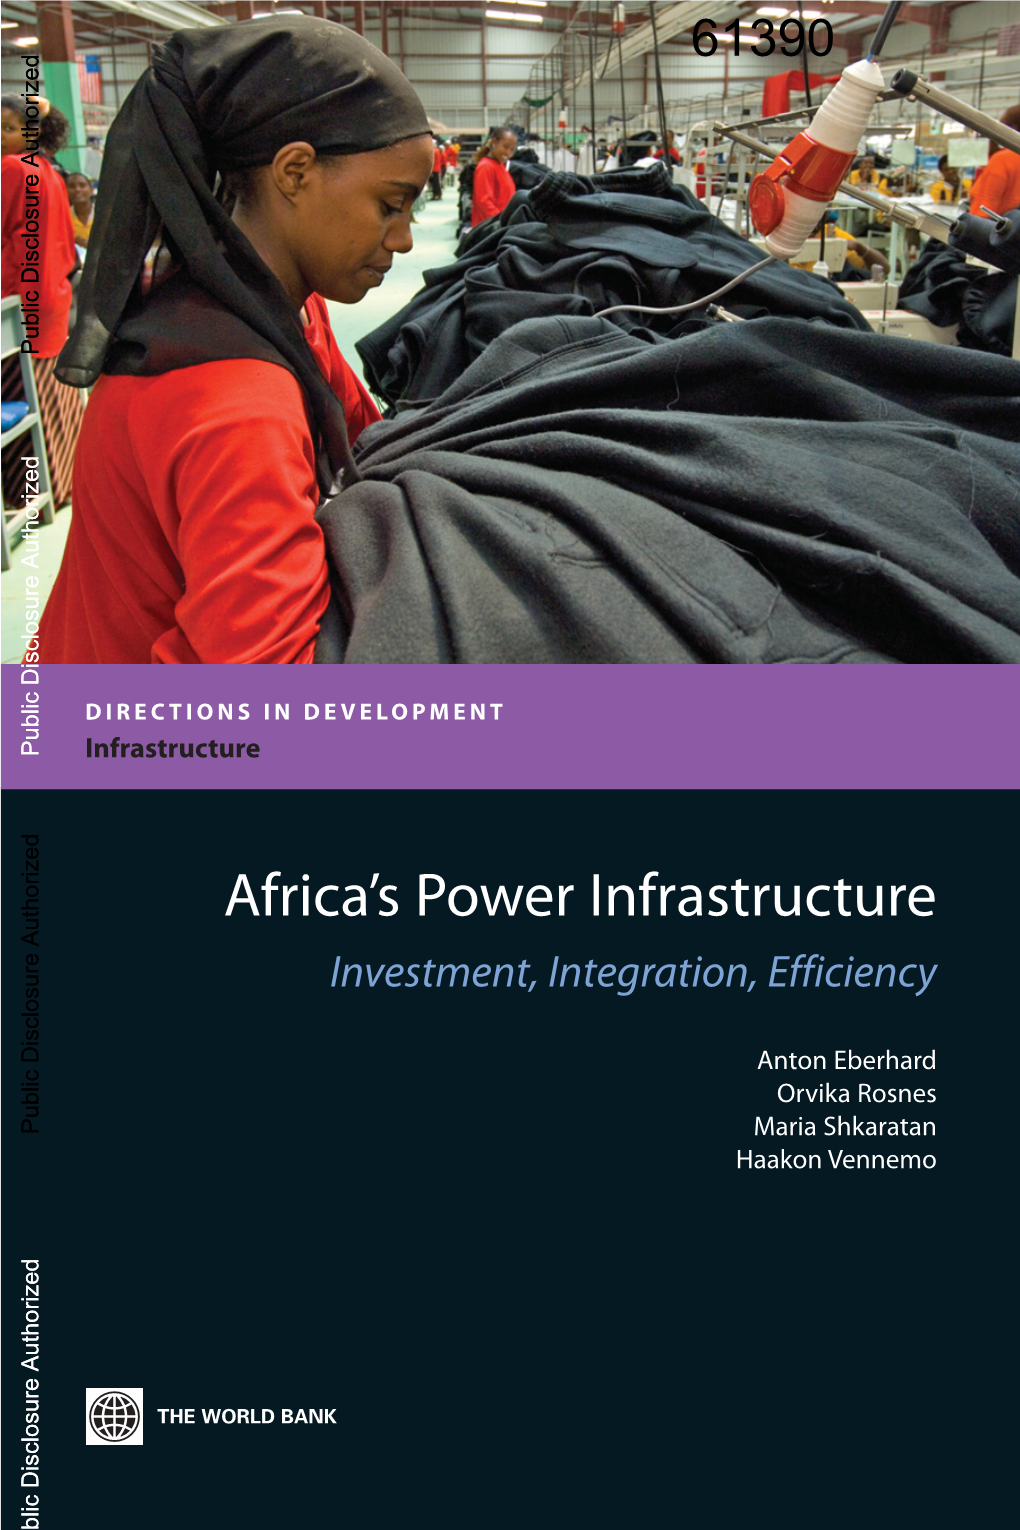 Africa's Power Infrastructure